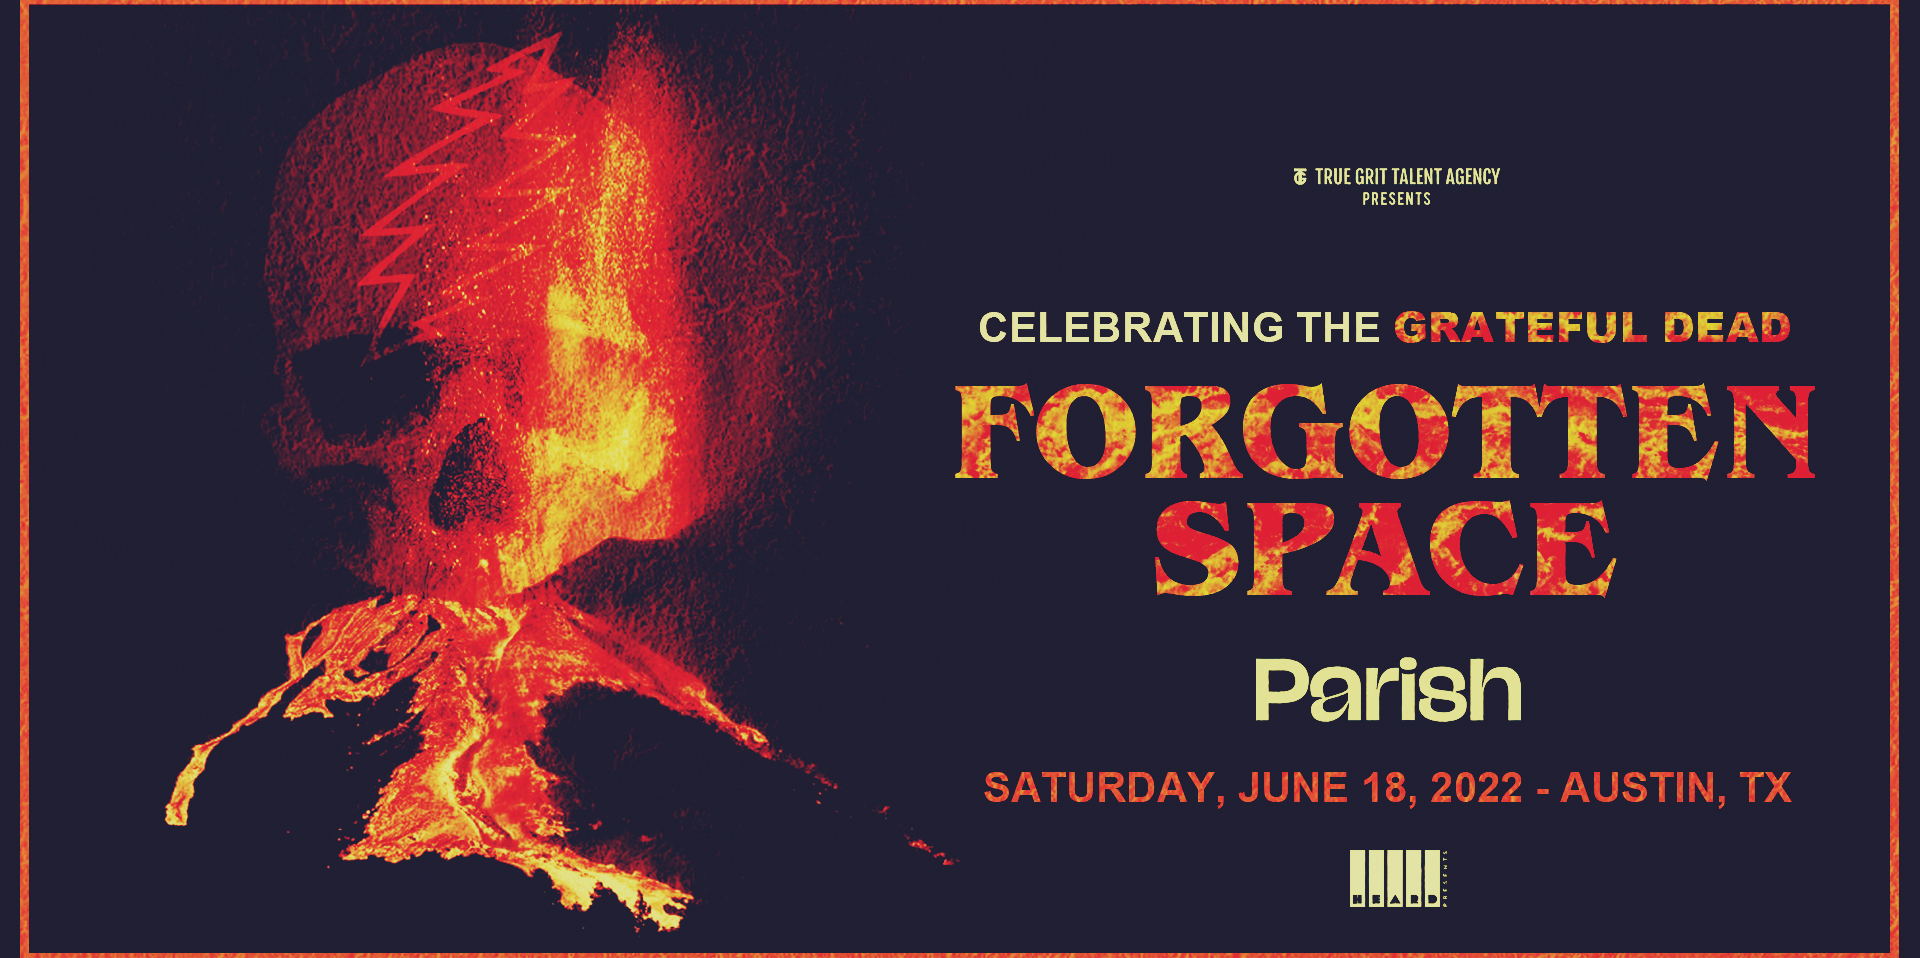 Forgotten Space - Celebrating the Grateful Dead (Grateful Dead Tribute) at Parish 6/18